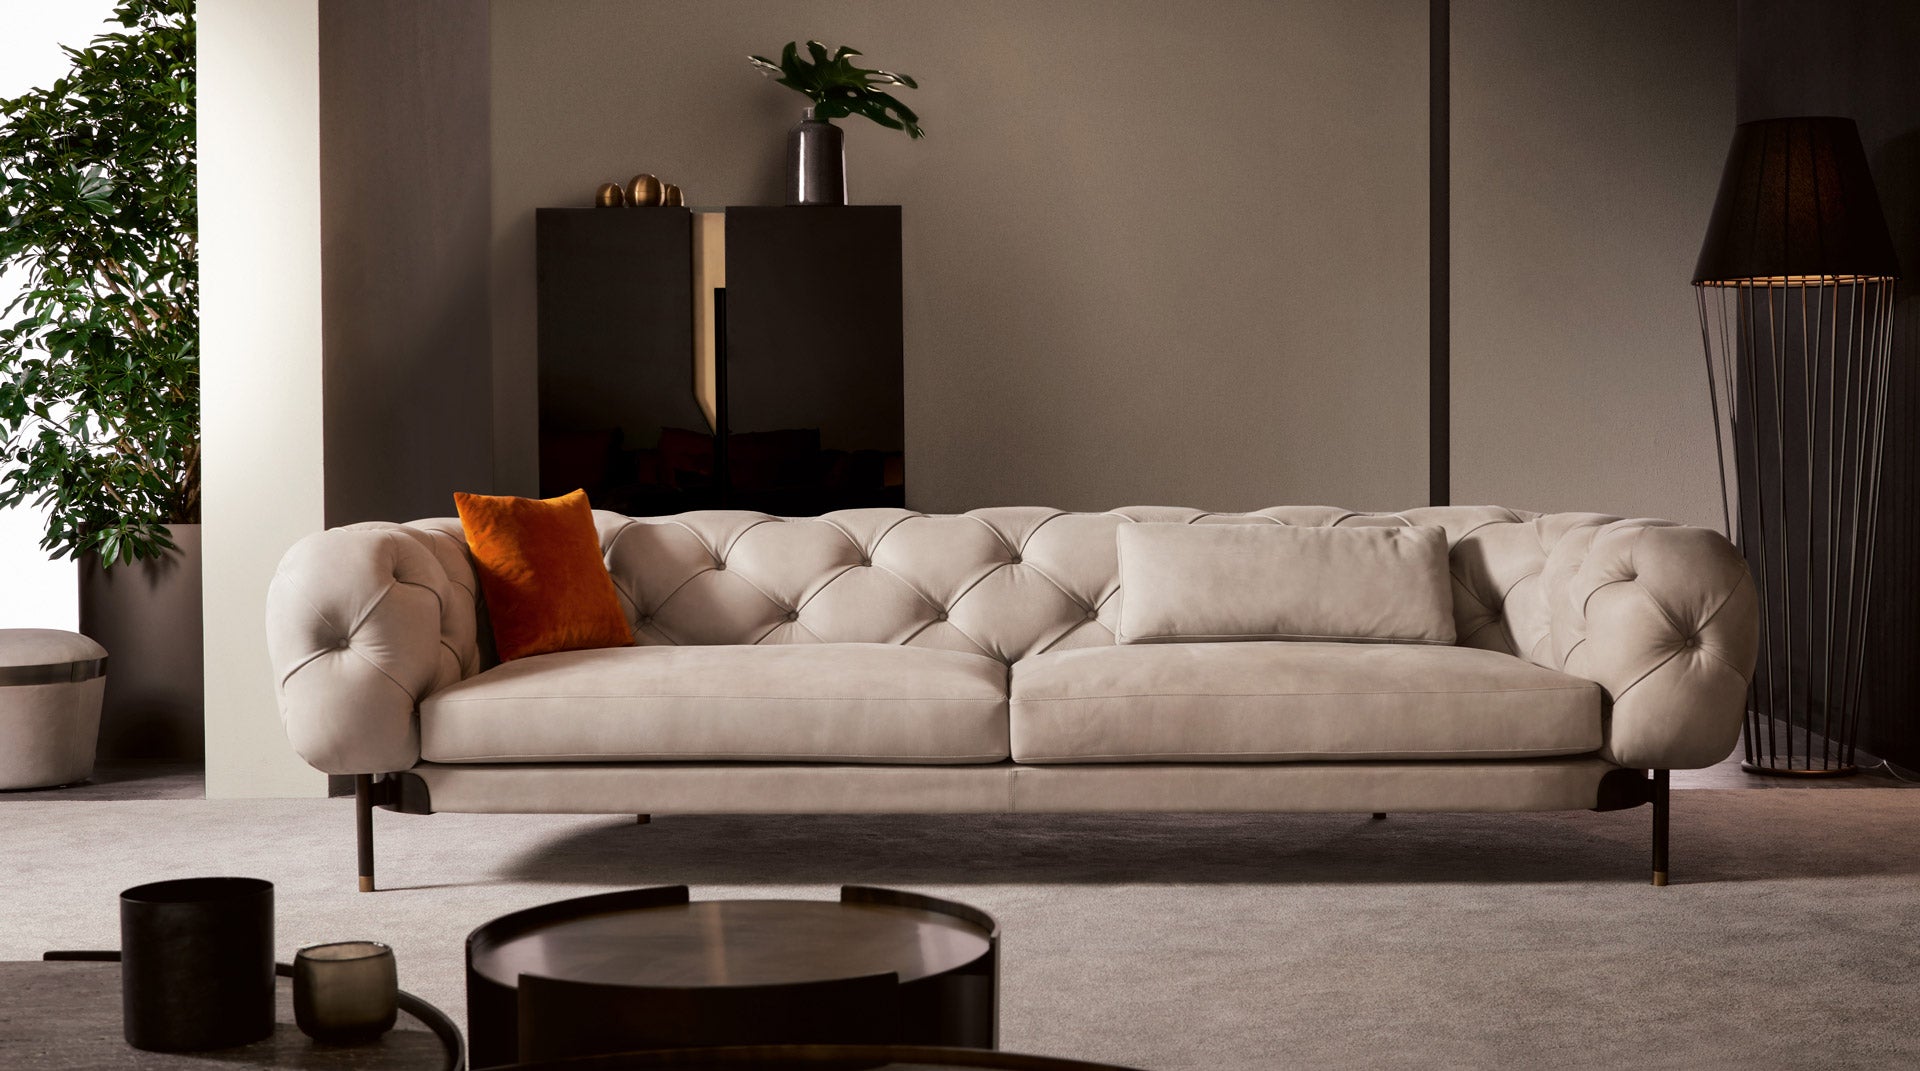 Atenae sofa